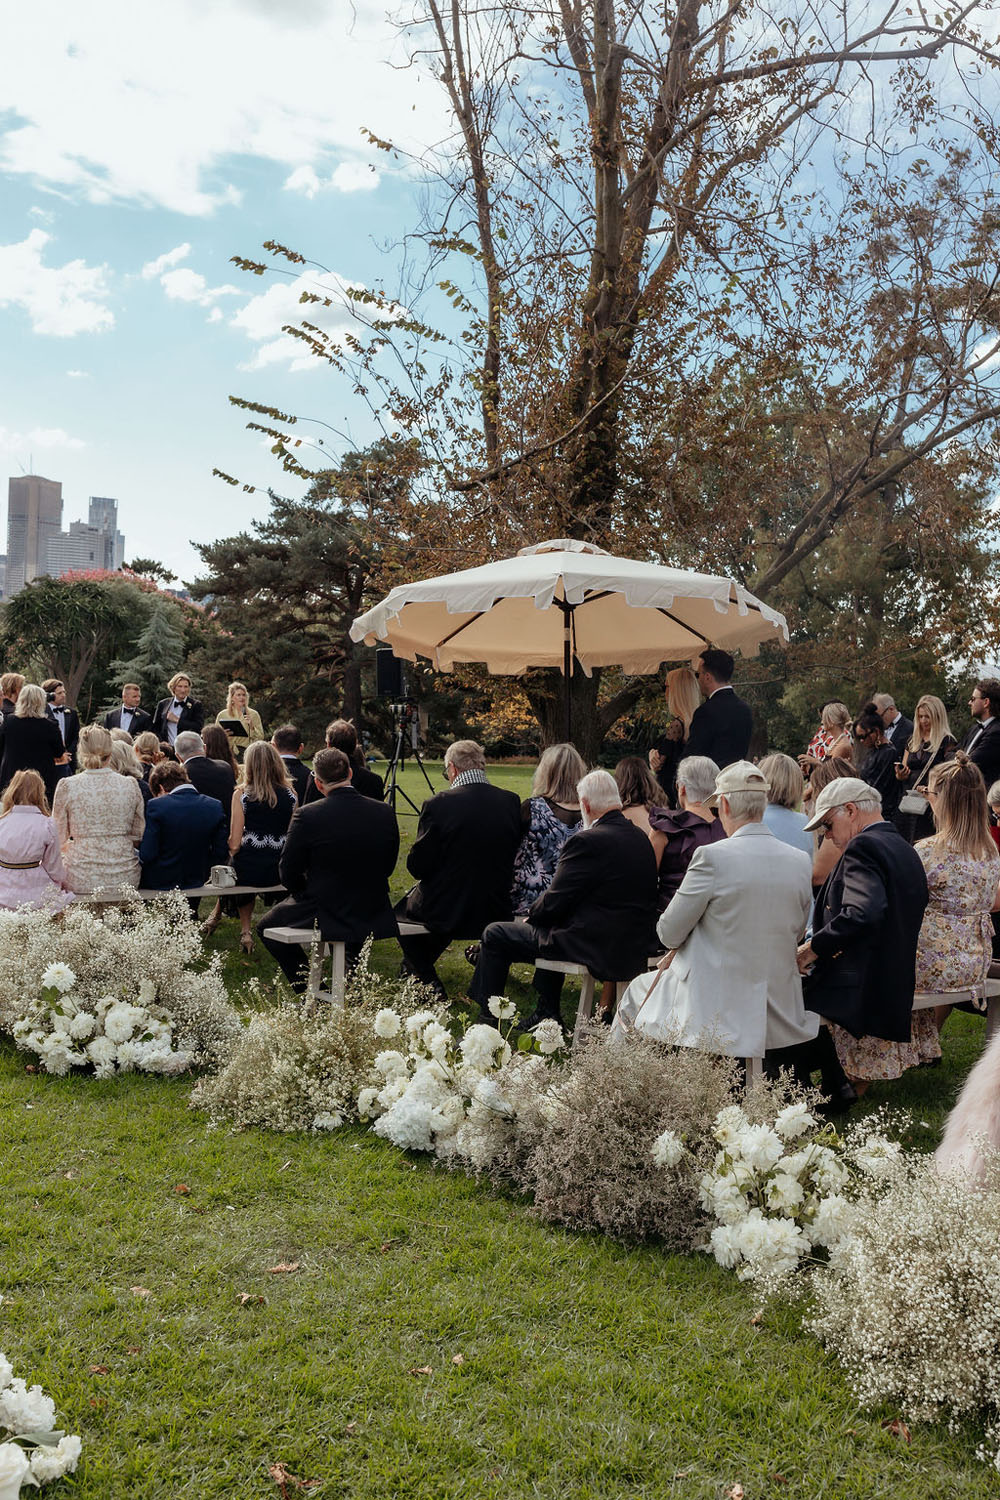 Australian entrepreneur Gretta van Riel's classic wedding